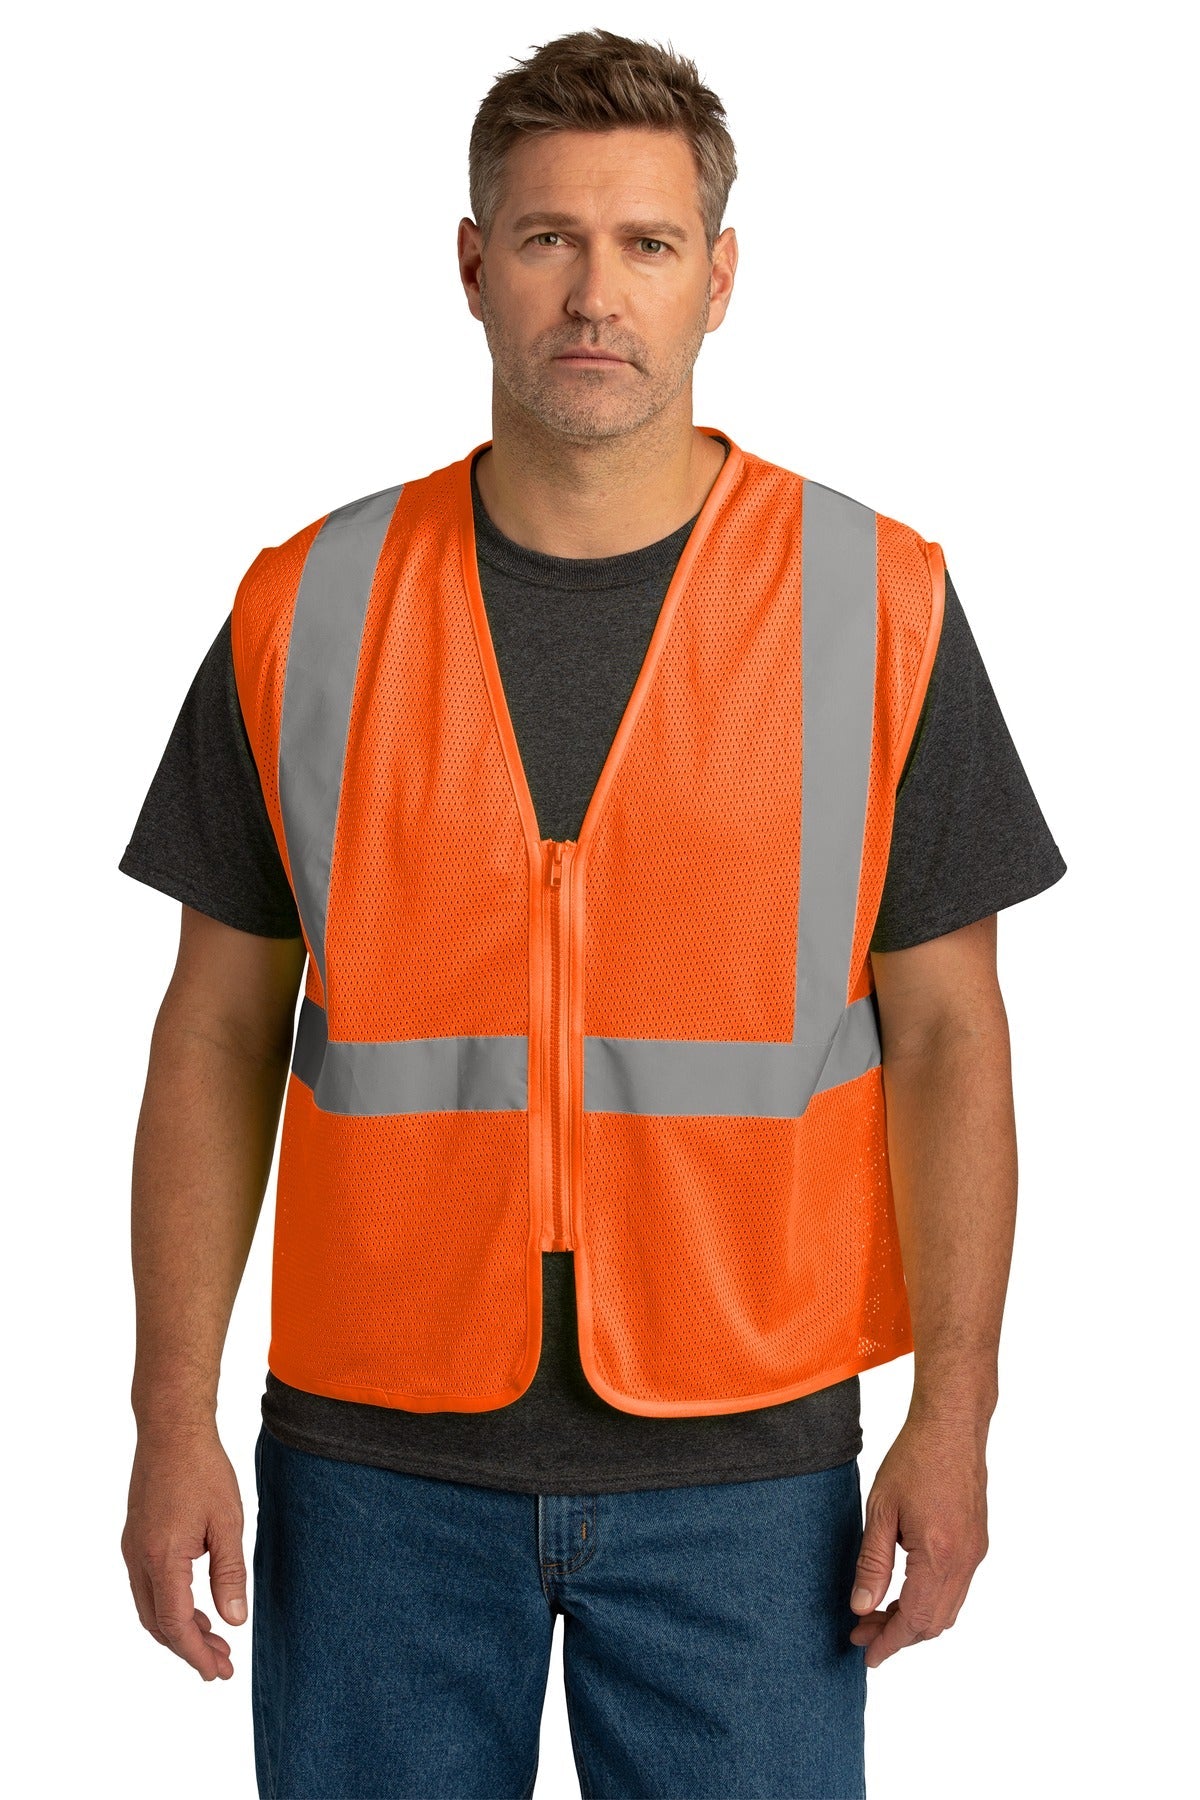 CornerStone ® ANSI 107 Class 2 Economy Mesh Zippered Vest. CSV101 - DFW Impression